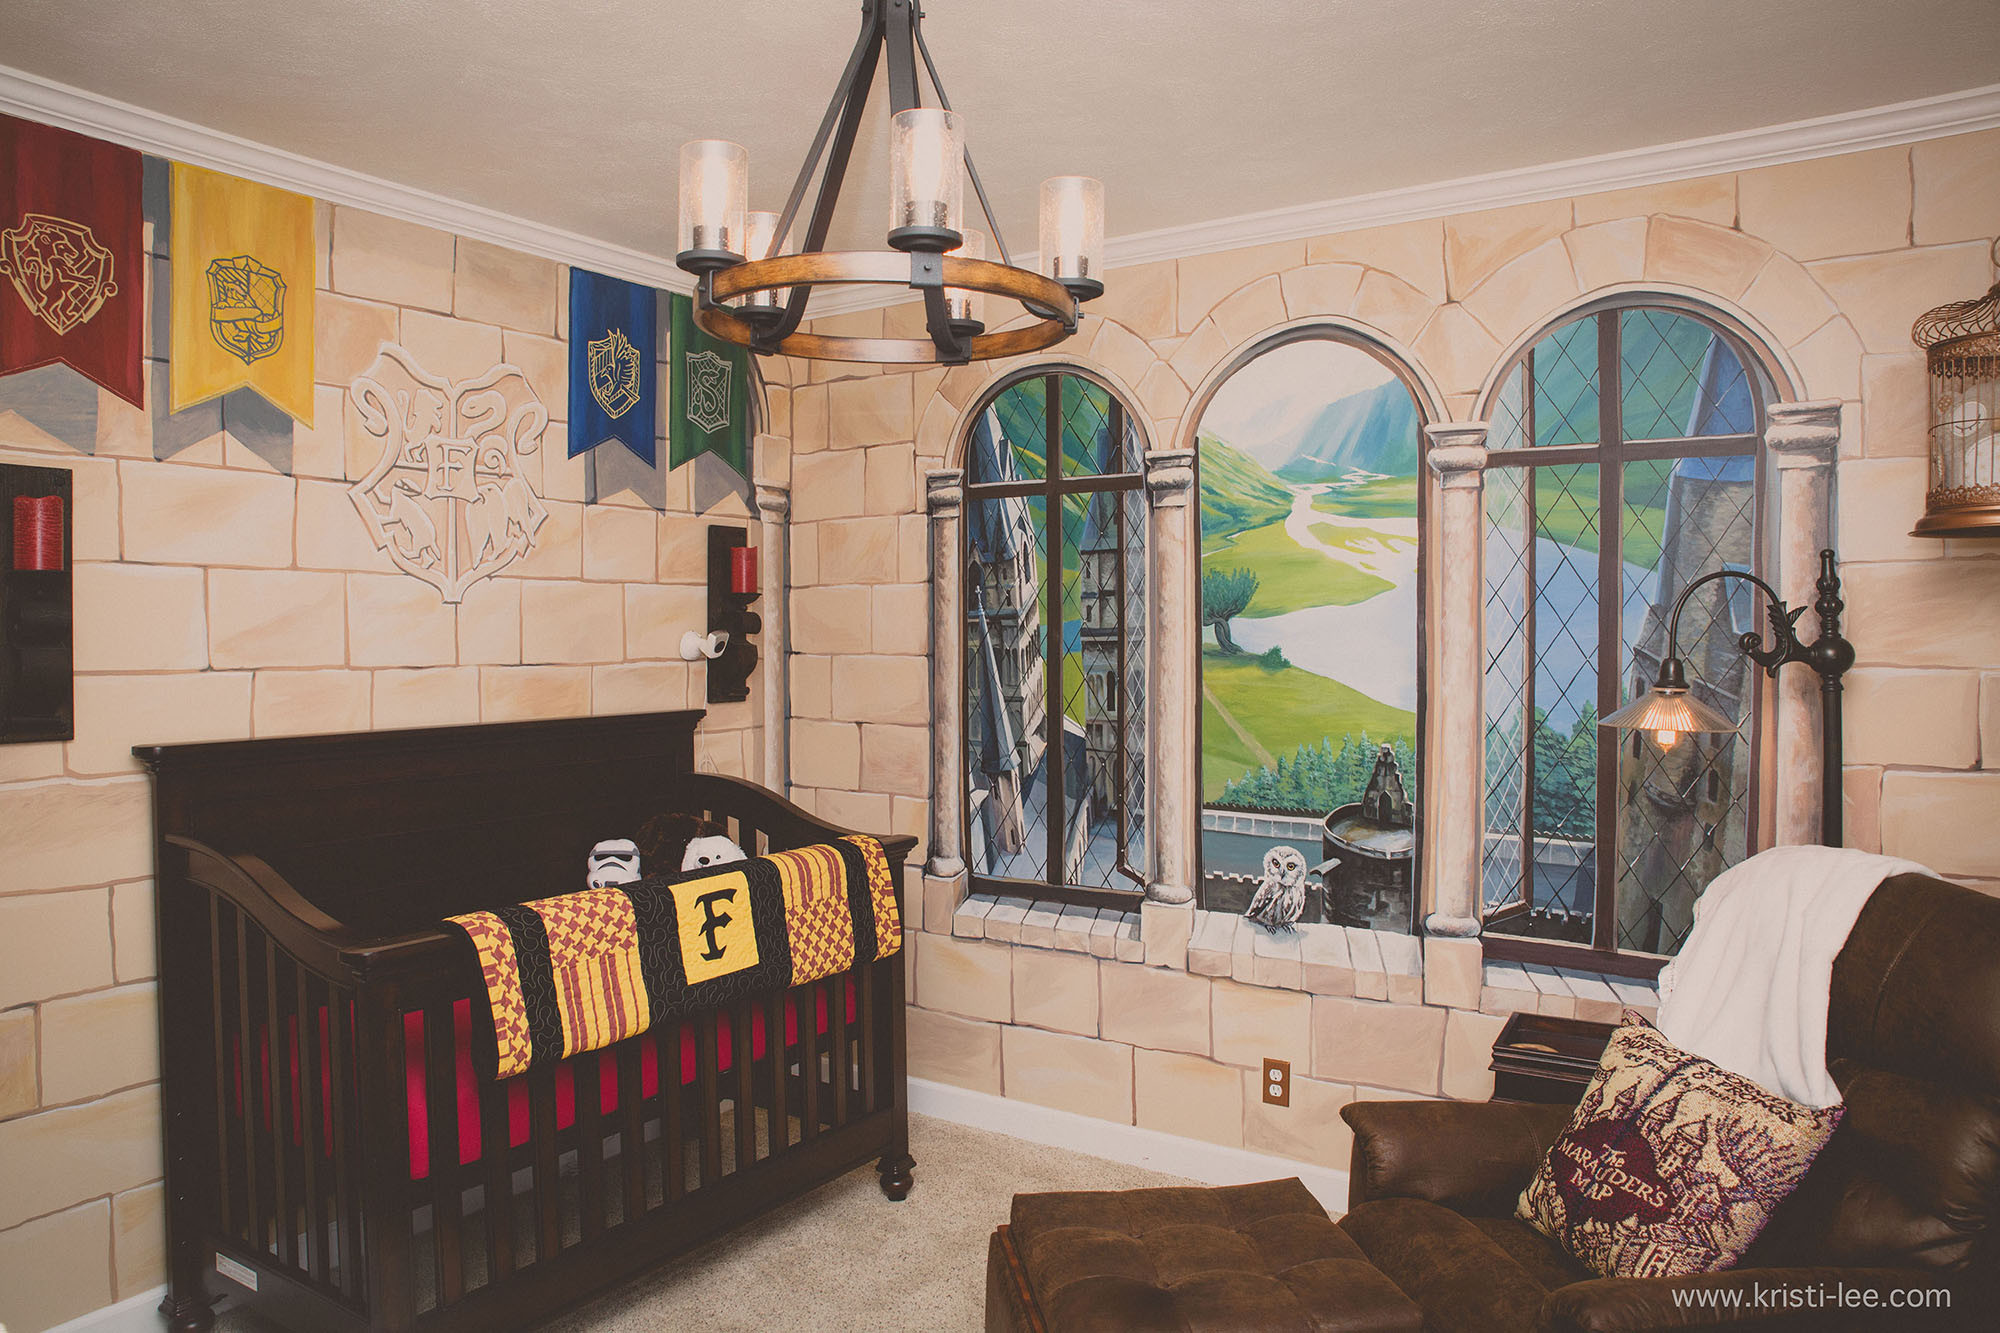 Harry Potter Baby Room Decor
 Parents create a magical Harry Potter themed nursery